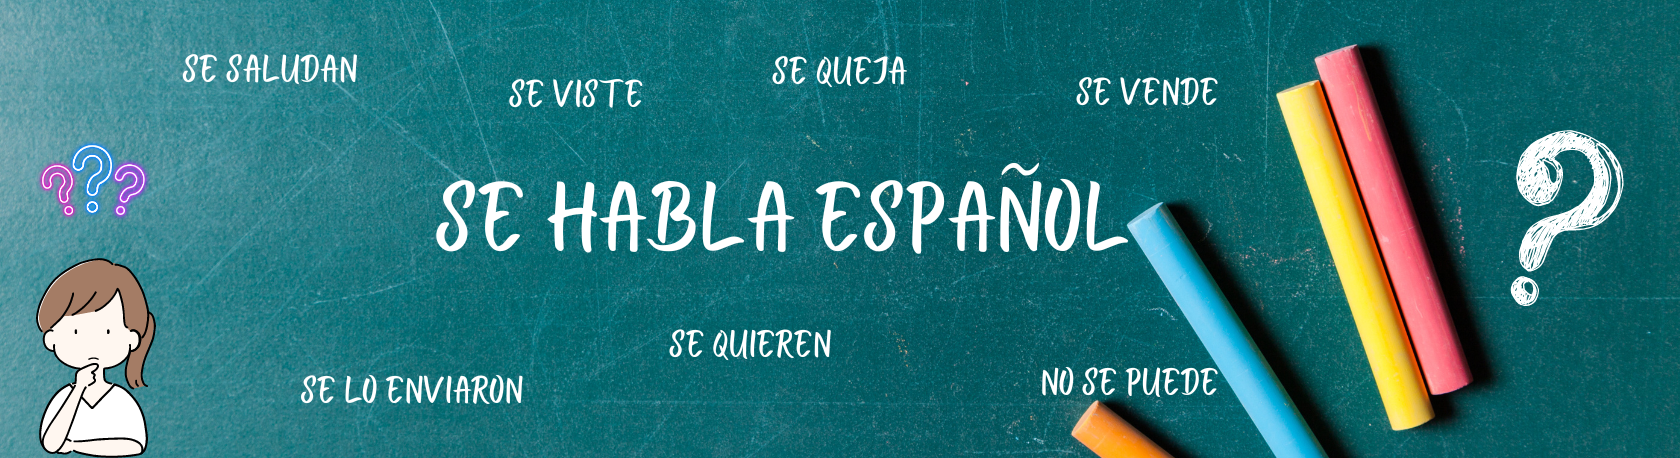 Test your Spanish Grammar: Uses of Impersonal SE (Intermediates) - Speak Spanish - Learn Spanish - Practice Spanish - Easy Español